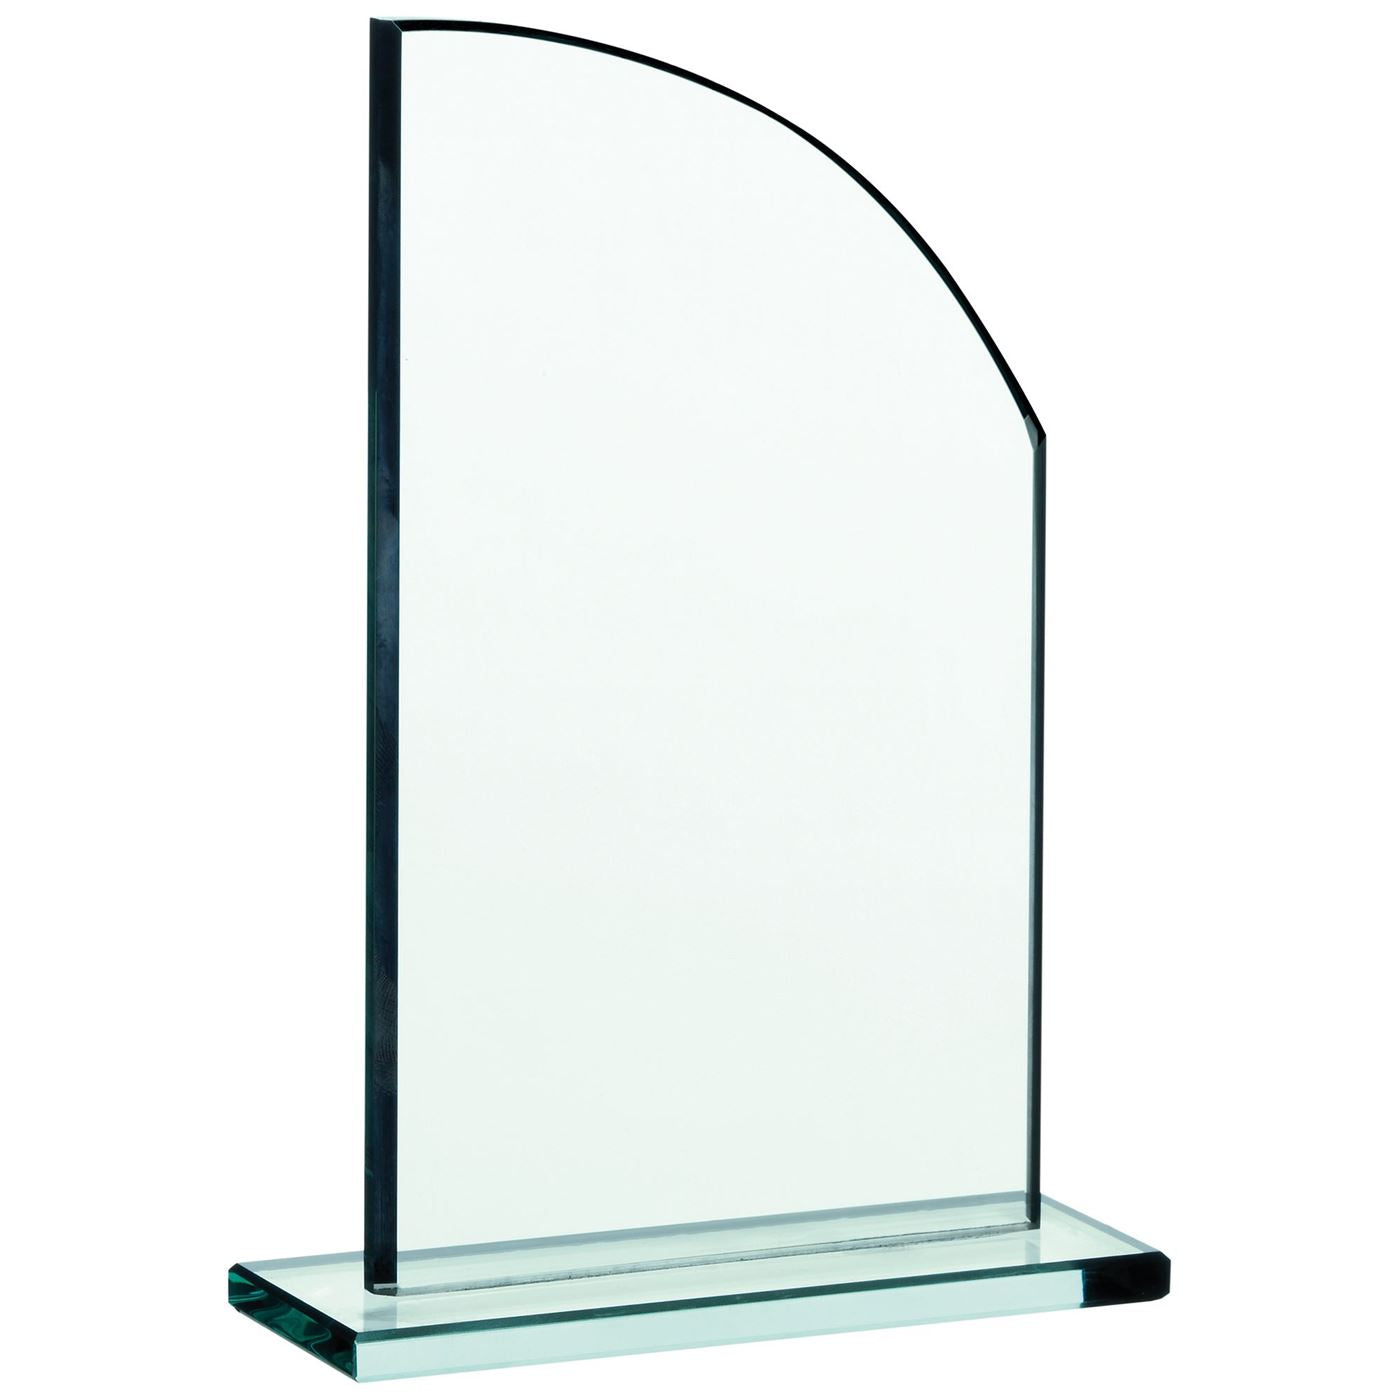 Jade Glass Curved Pioneer Trophy Award